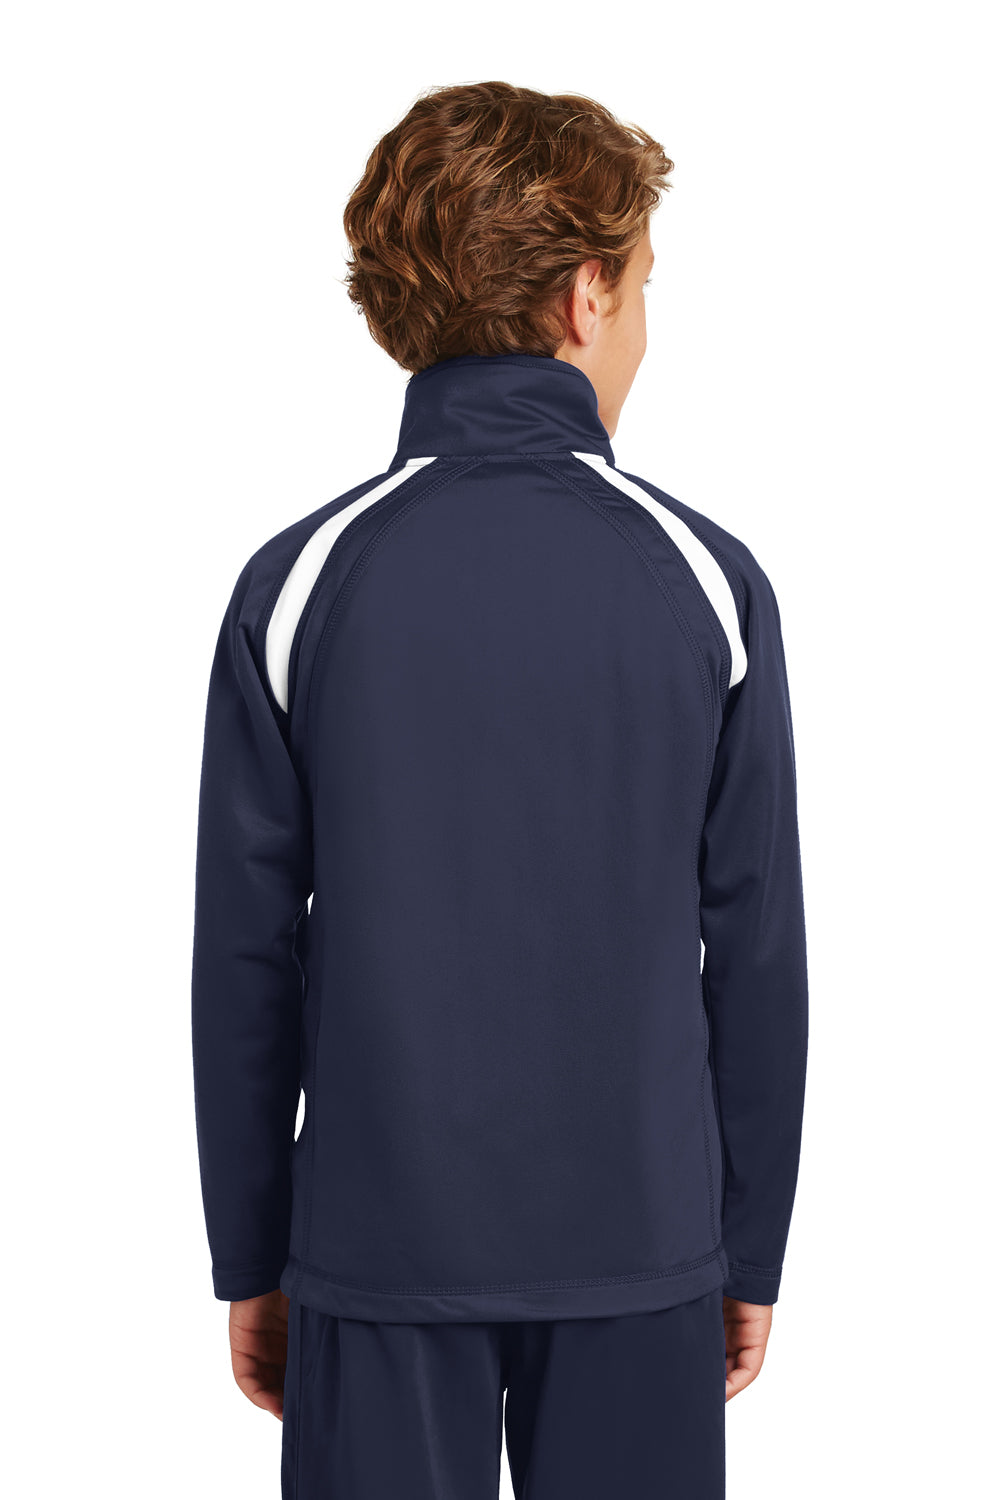 Sport-Tek YST90 Youth Full Zip Track Jacket Navy Blue Back